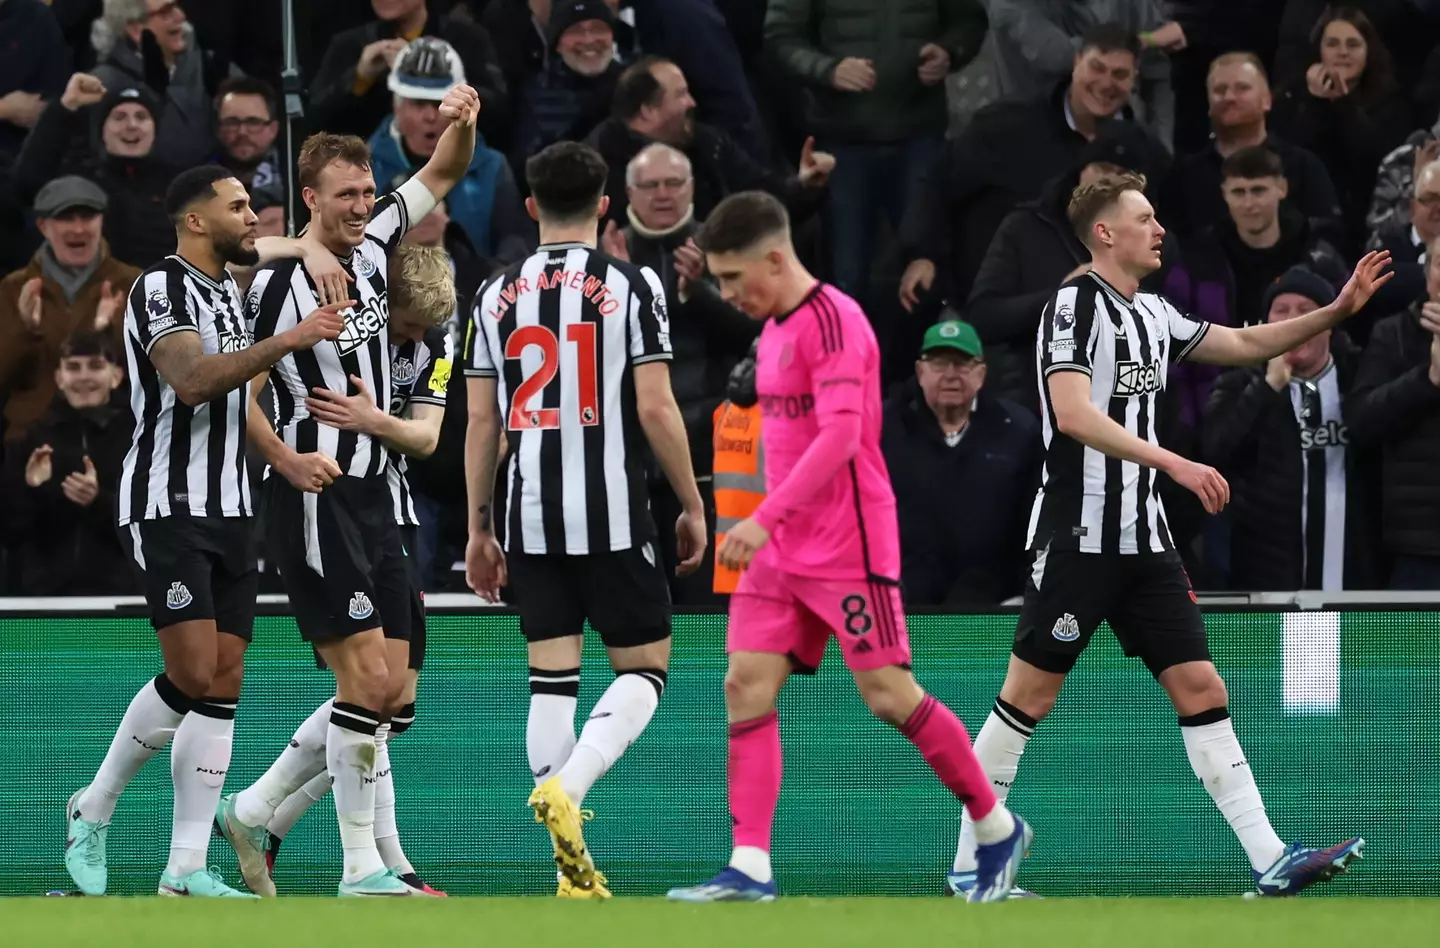 Newcastle United celebrate scoring a goal against Fulham. Image: Getty